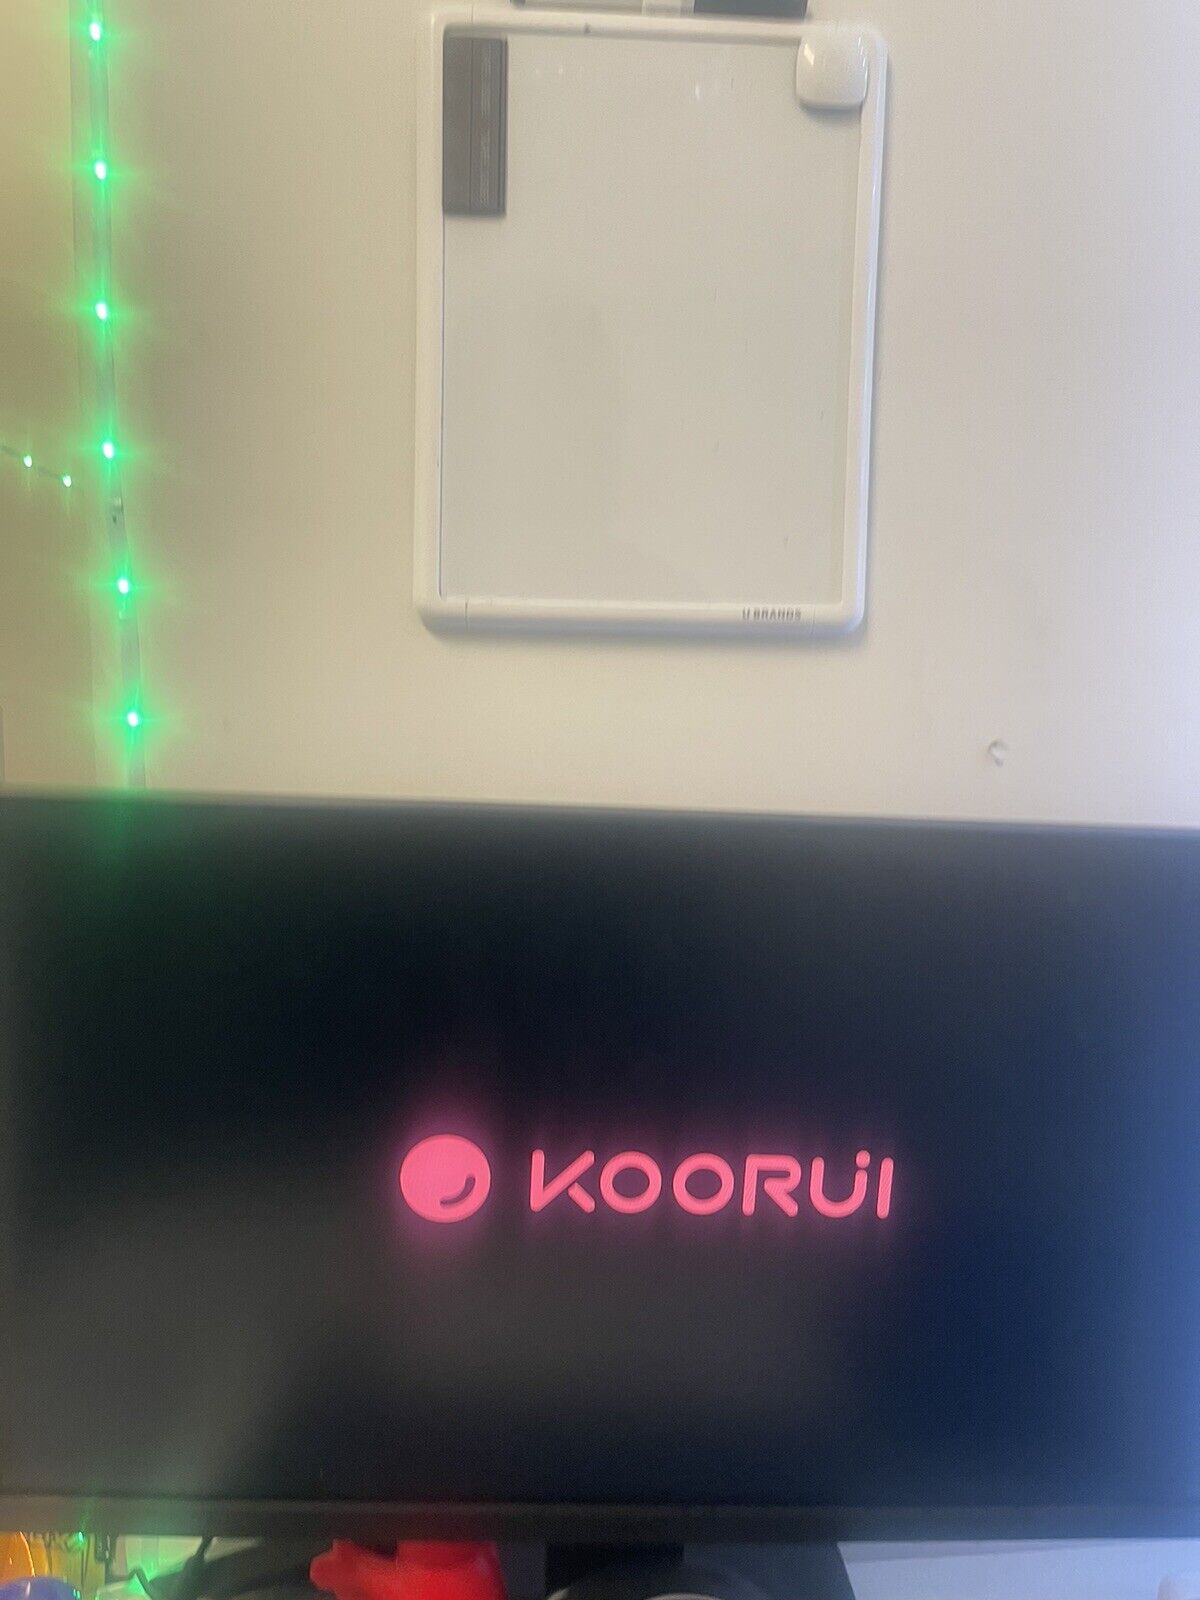 KOORUI 22 Inch 75Hz 99%sRGB LED Computer Monitor,Full HD 1920 x 1080 